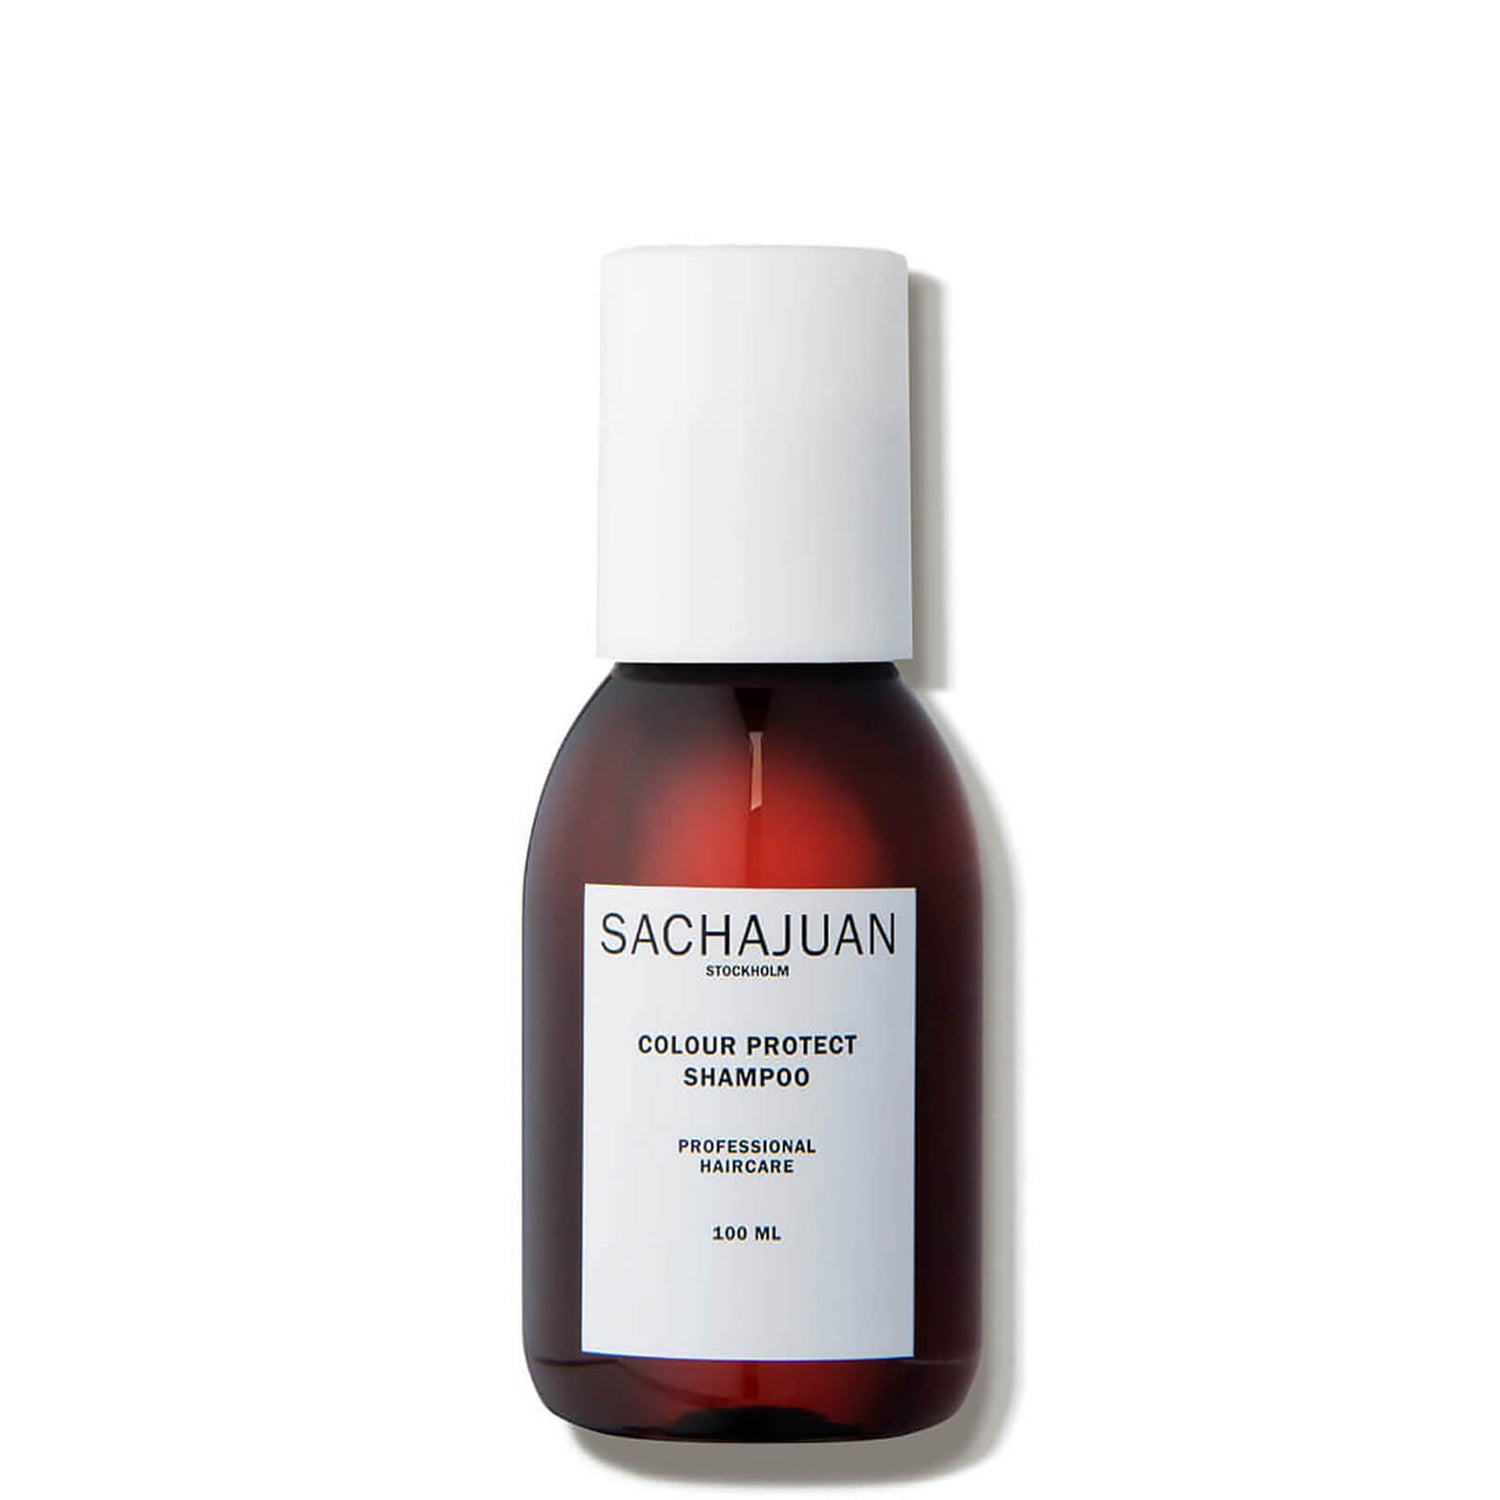 Sachajuan Colour Protect Shampoo (3.4 fl. oz.)